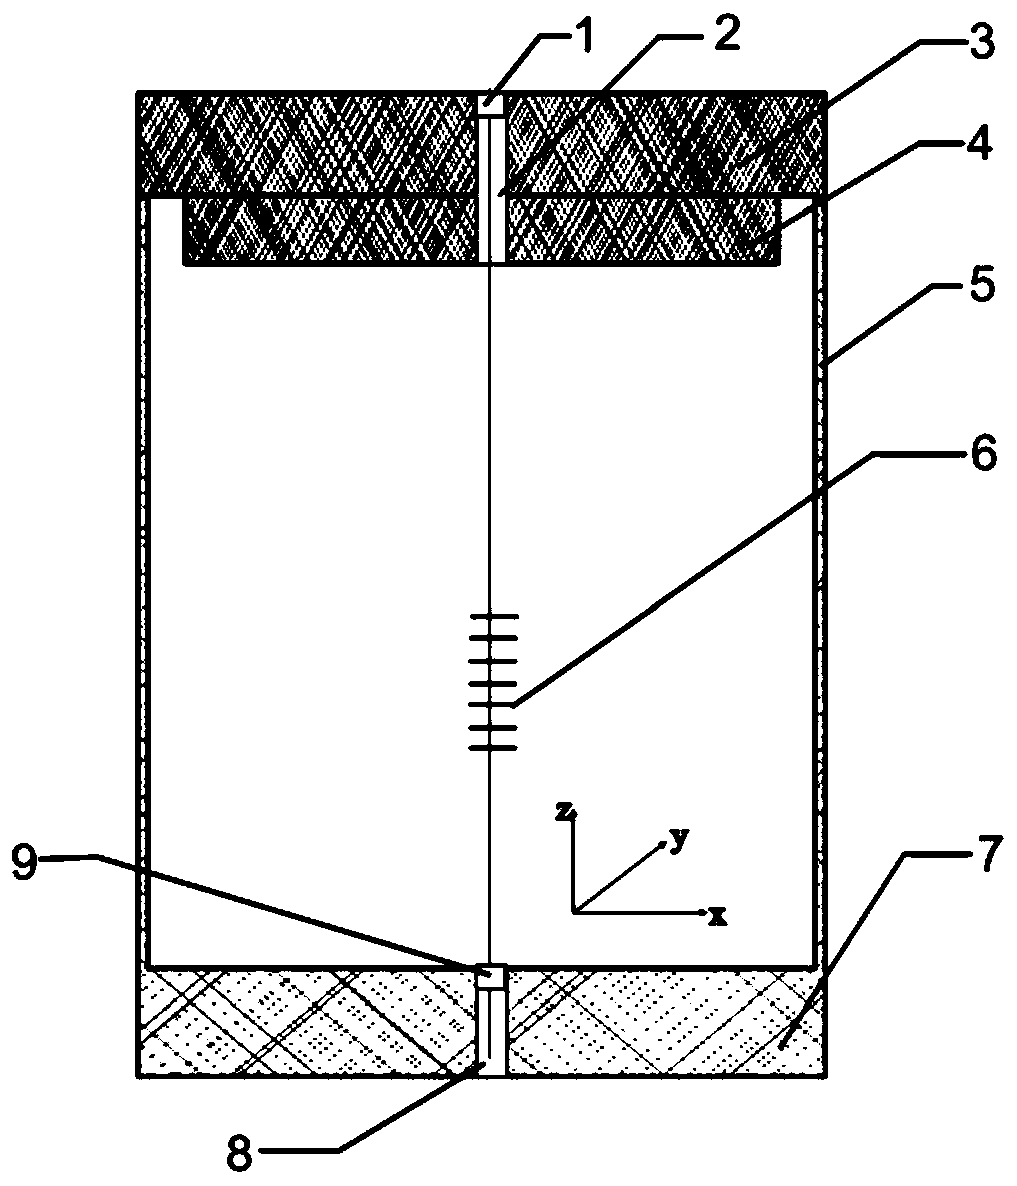 Triangular prism type fiber grating acceleration detector